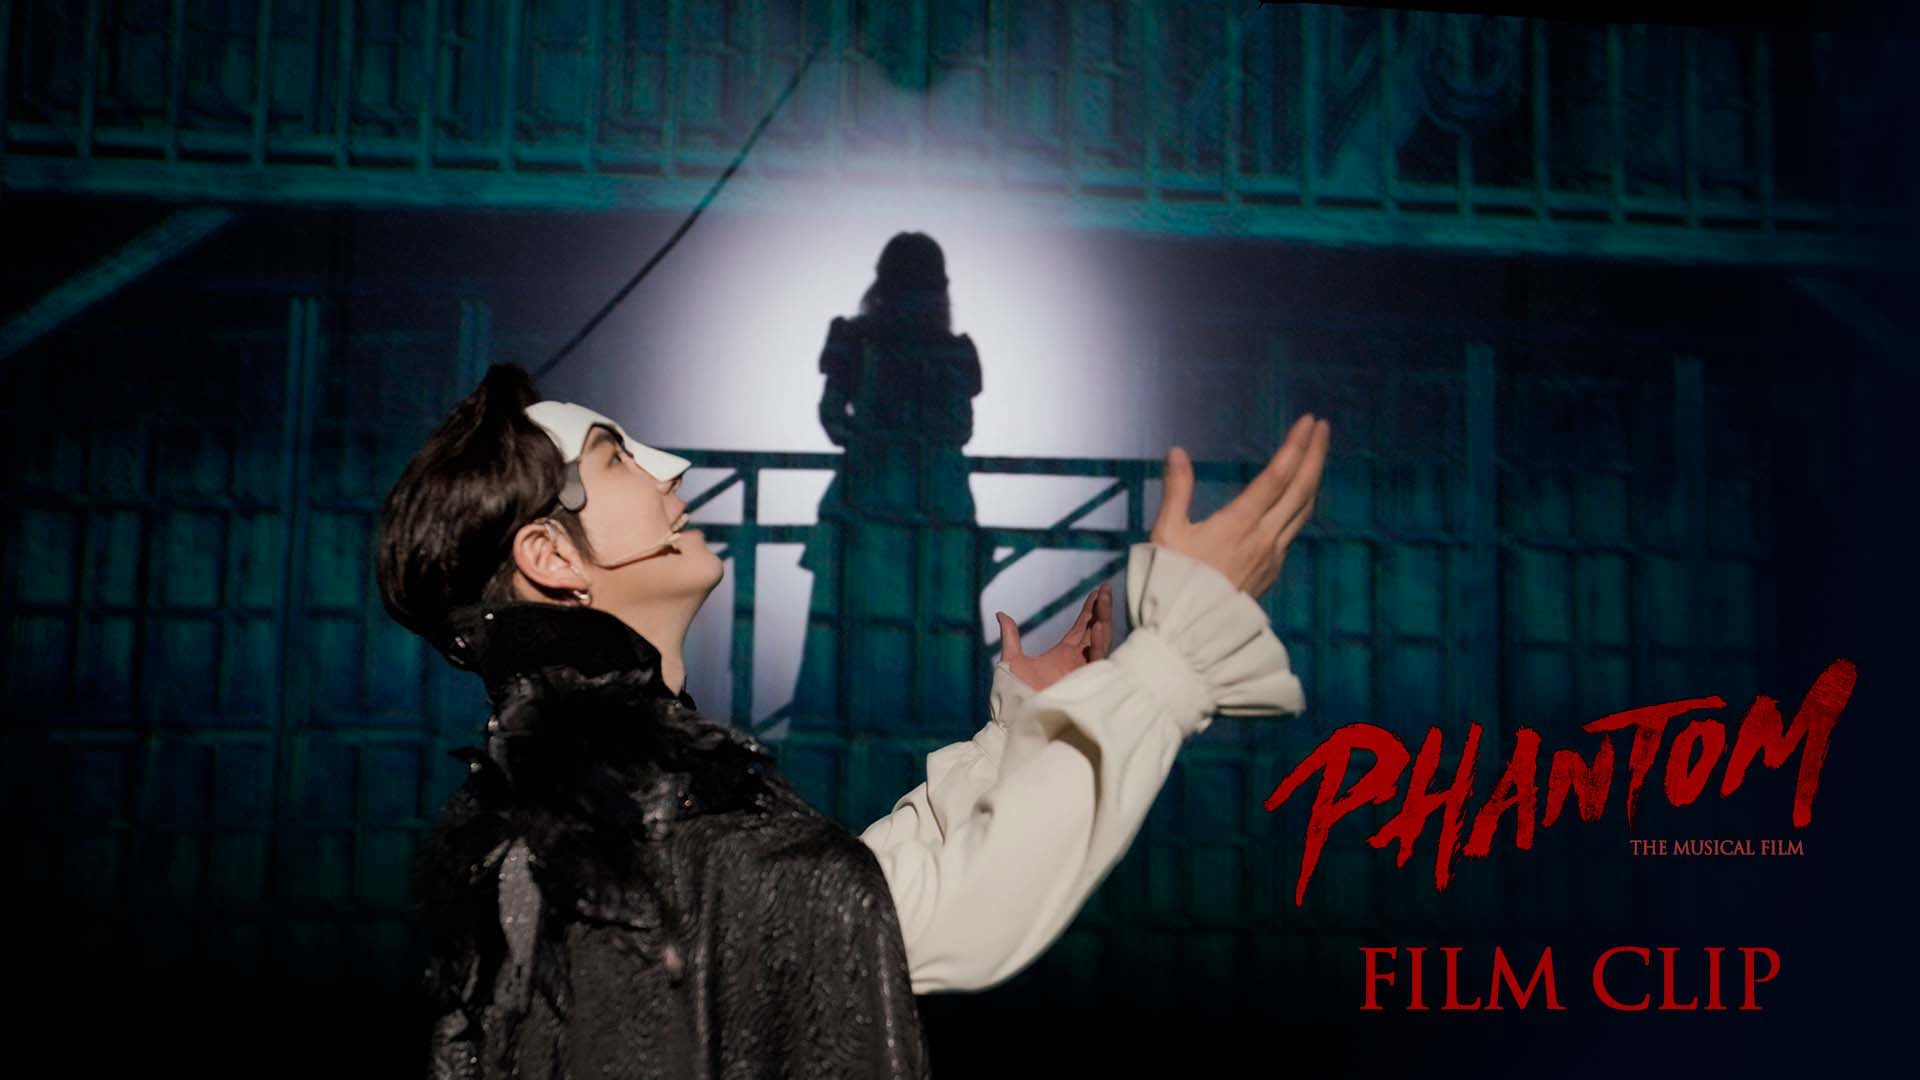 Watch Phantom The Musical Film Clip Online Vimeo On Demand on Vimeo